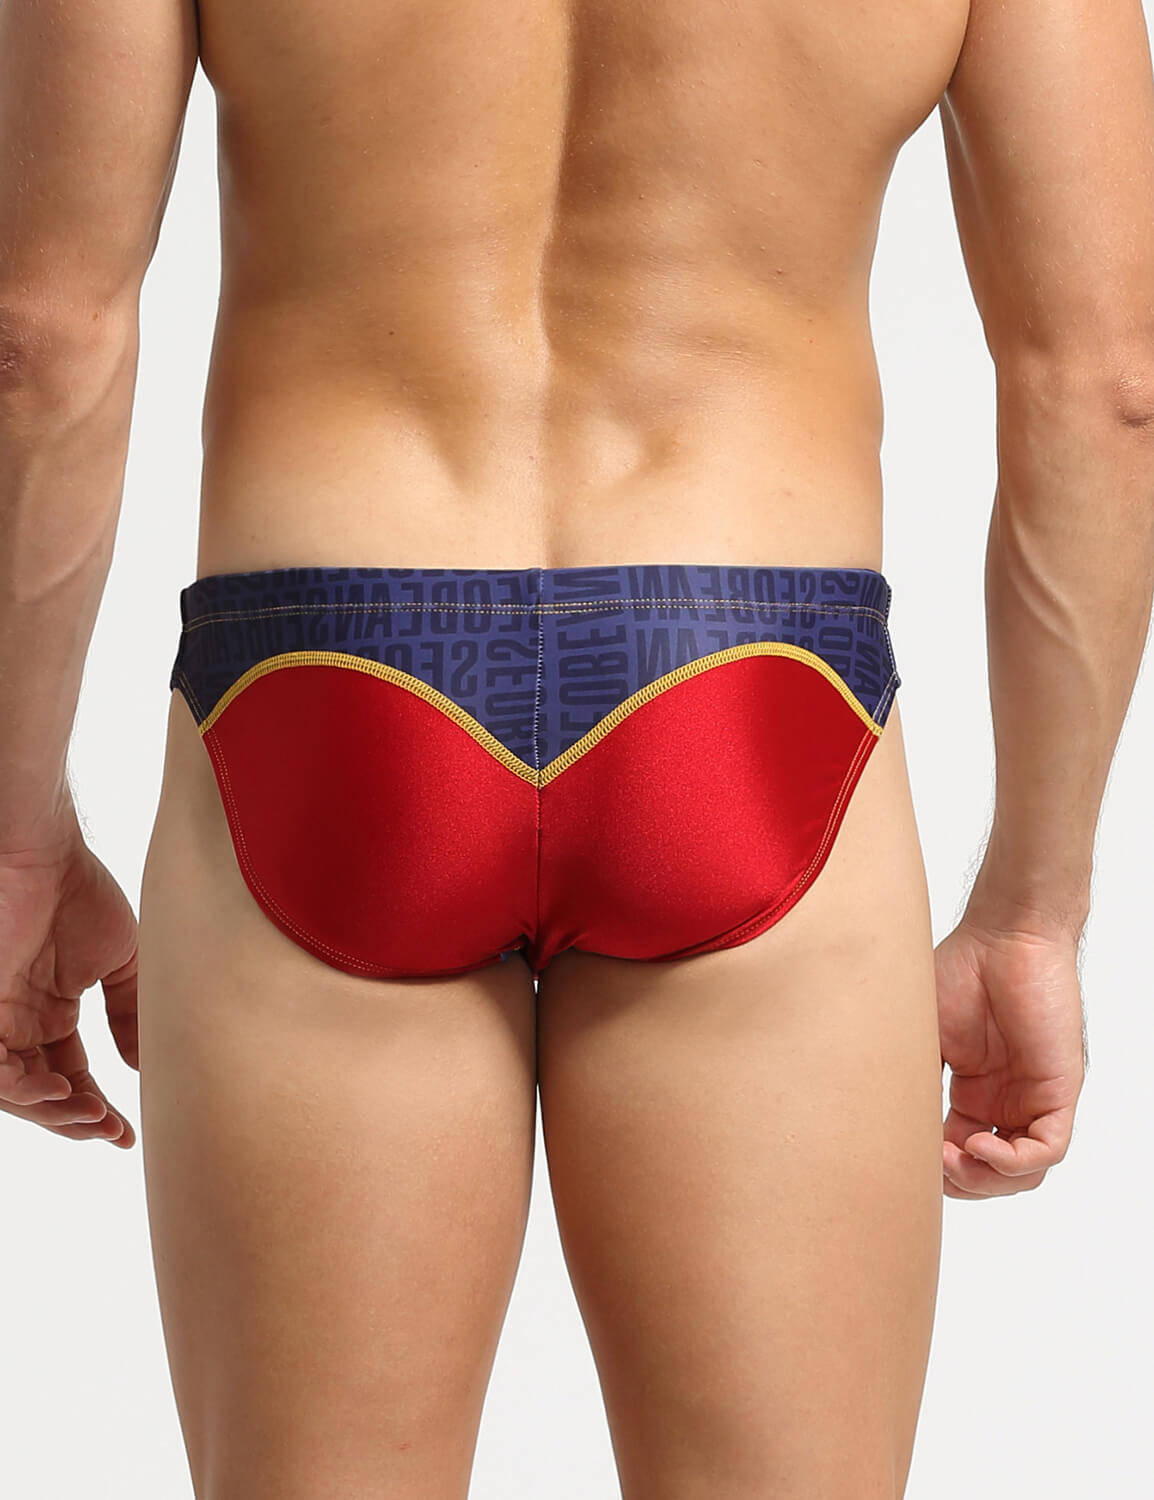 New! SEOBEAN Rhythm Bikini Swimming Briefs – mbo - Men's Underwear & Apparel